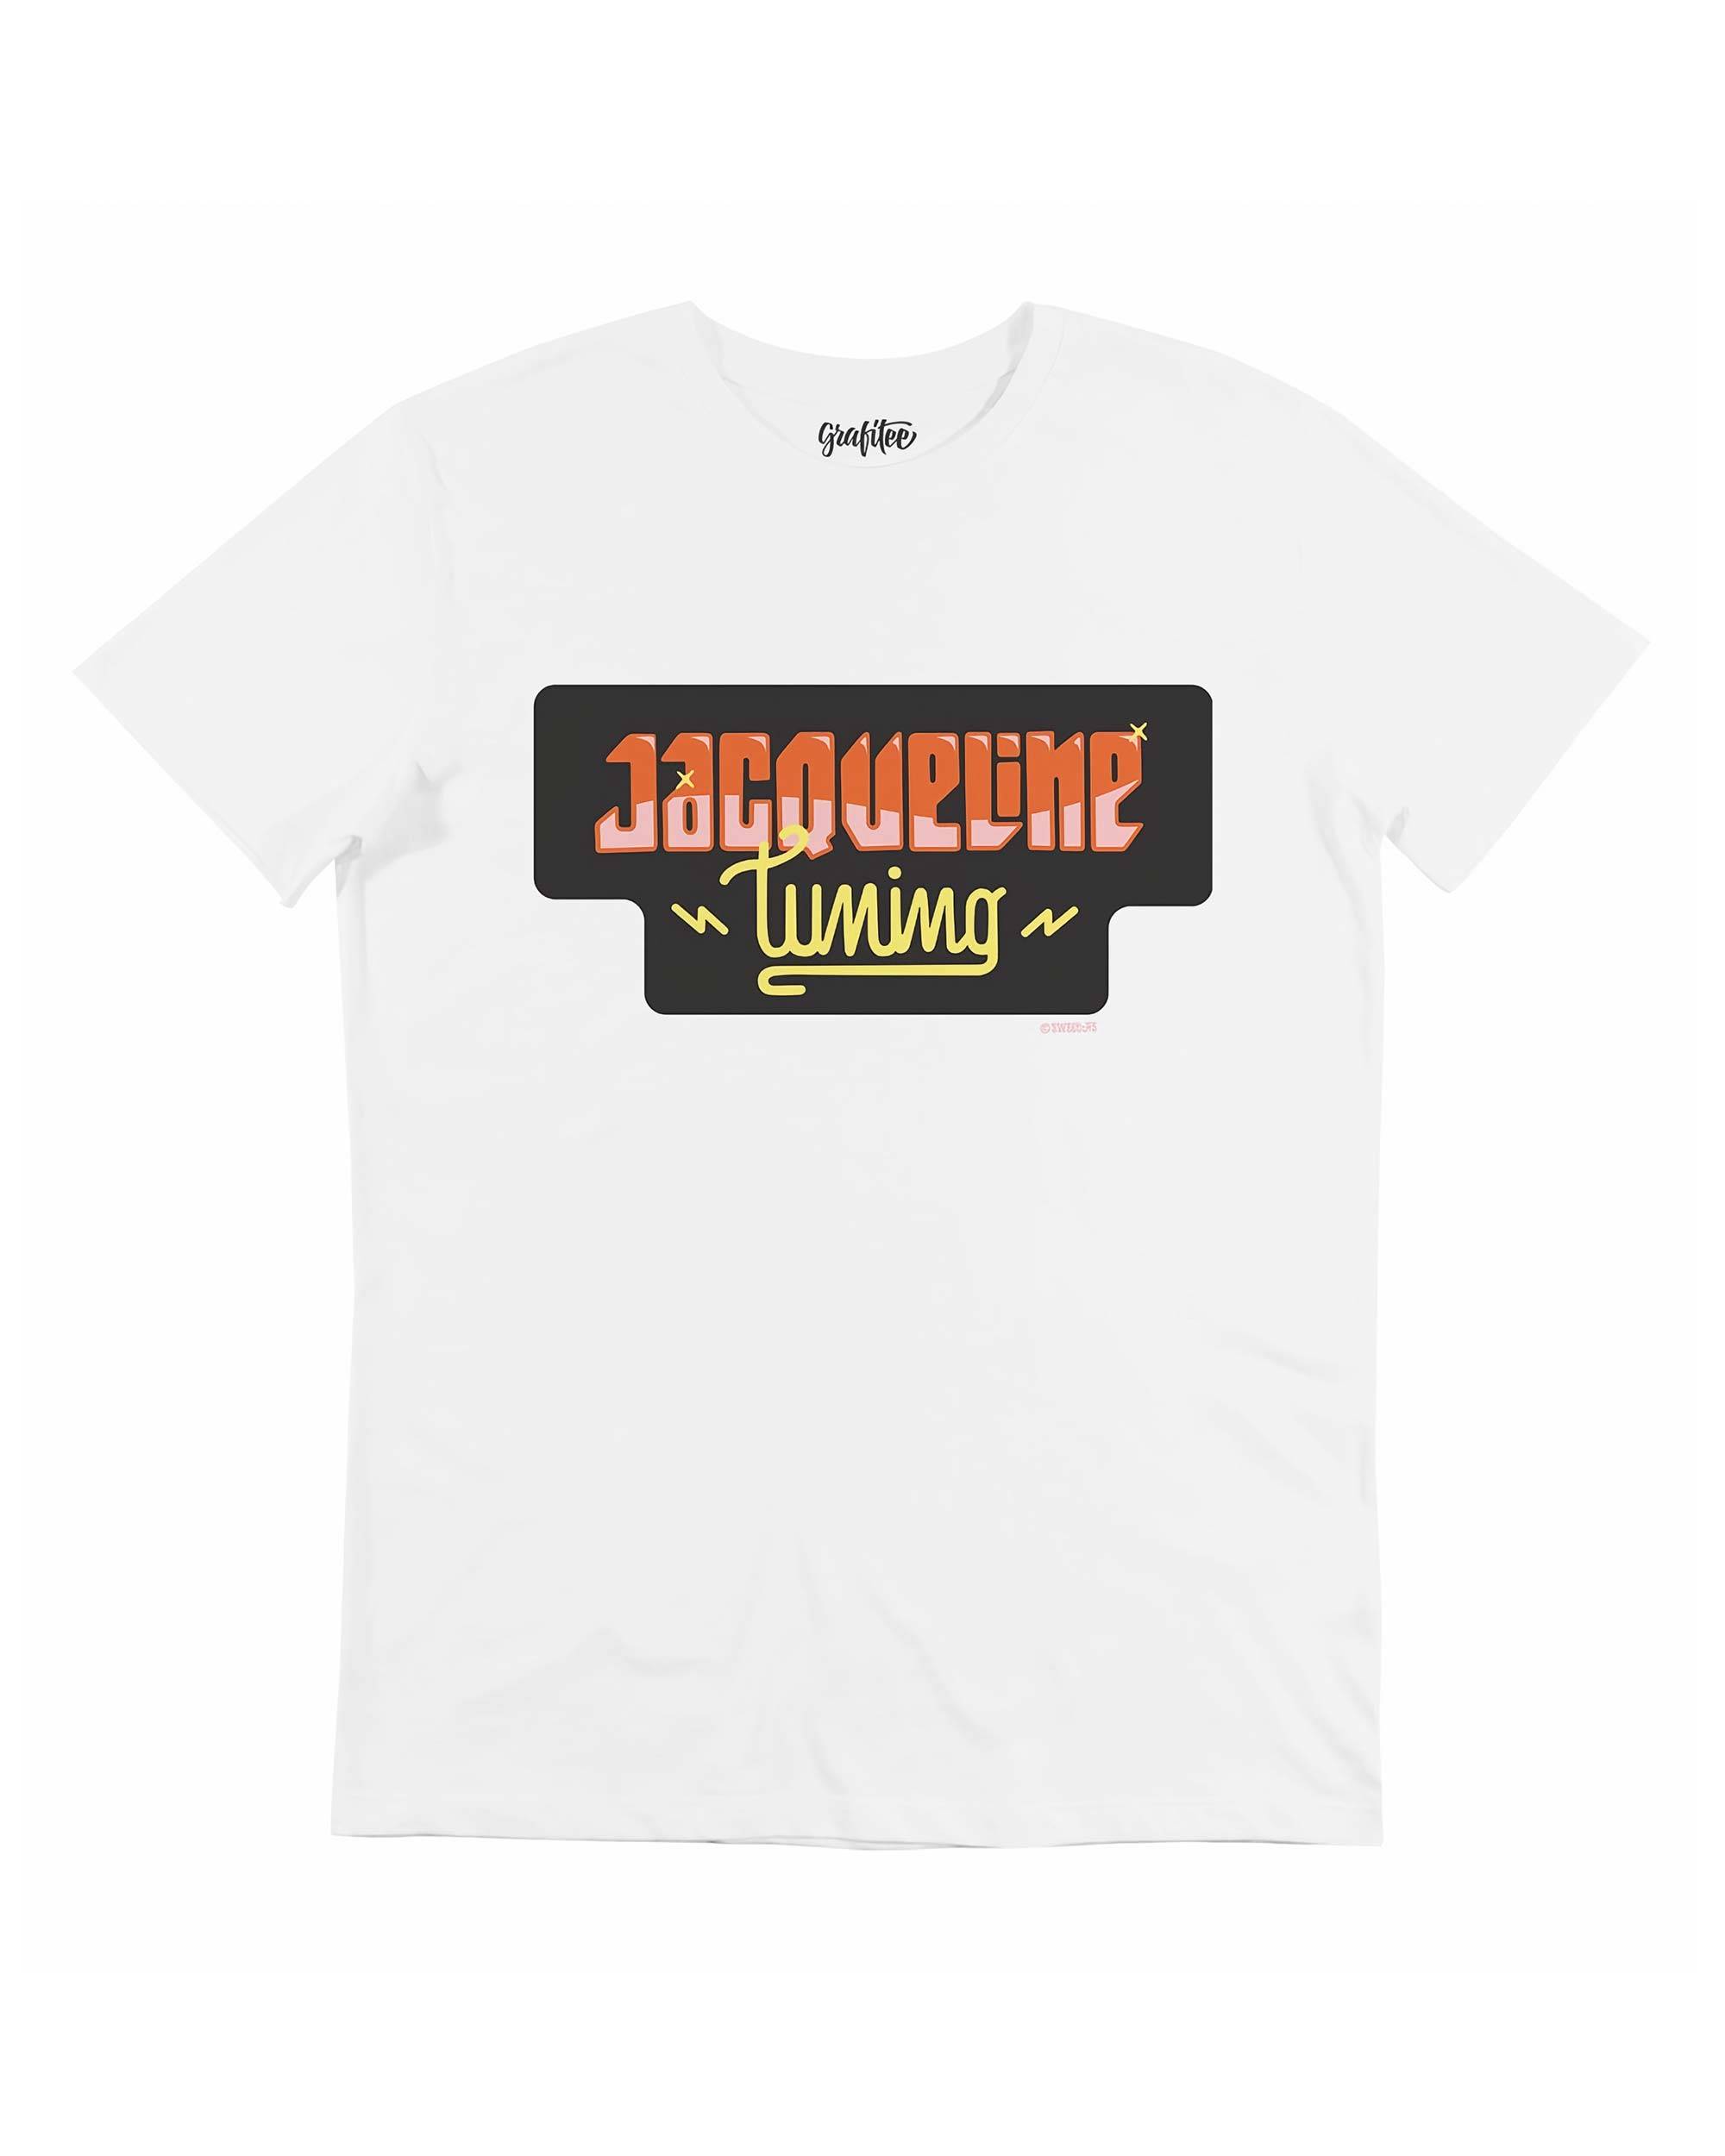 T-shirt Jacqueline Tuning Grafitee